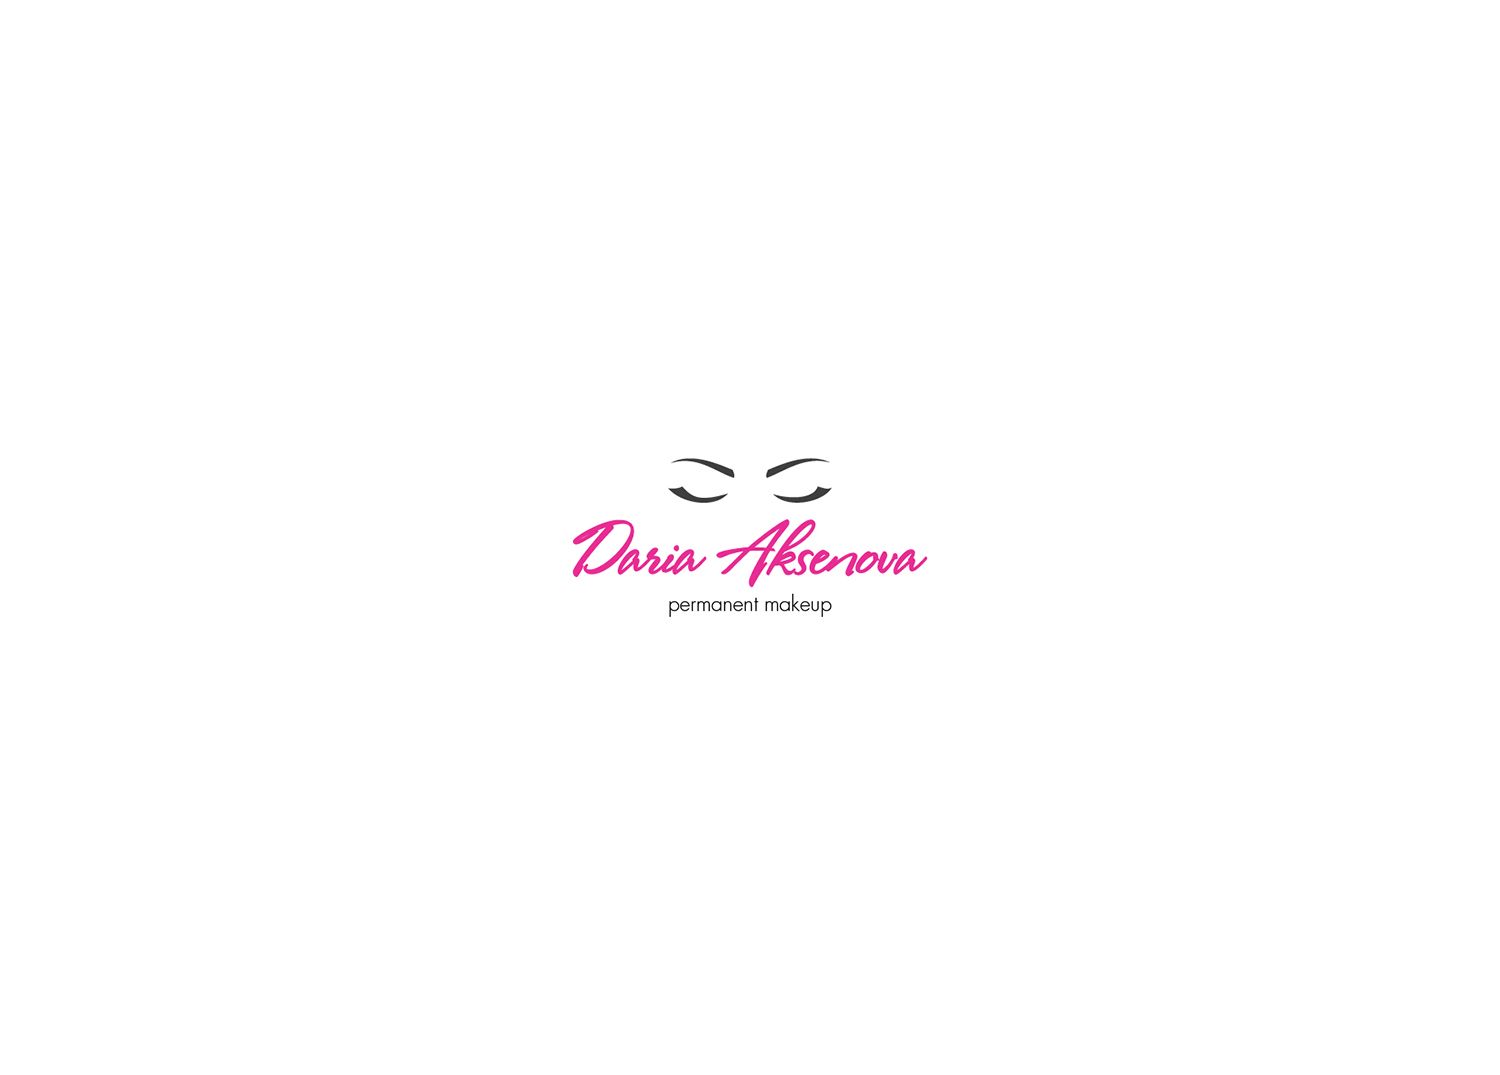 Логотип для Daria Aksenova Permanent makeup - дизайнер vavaeva